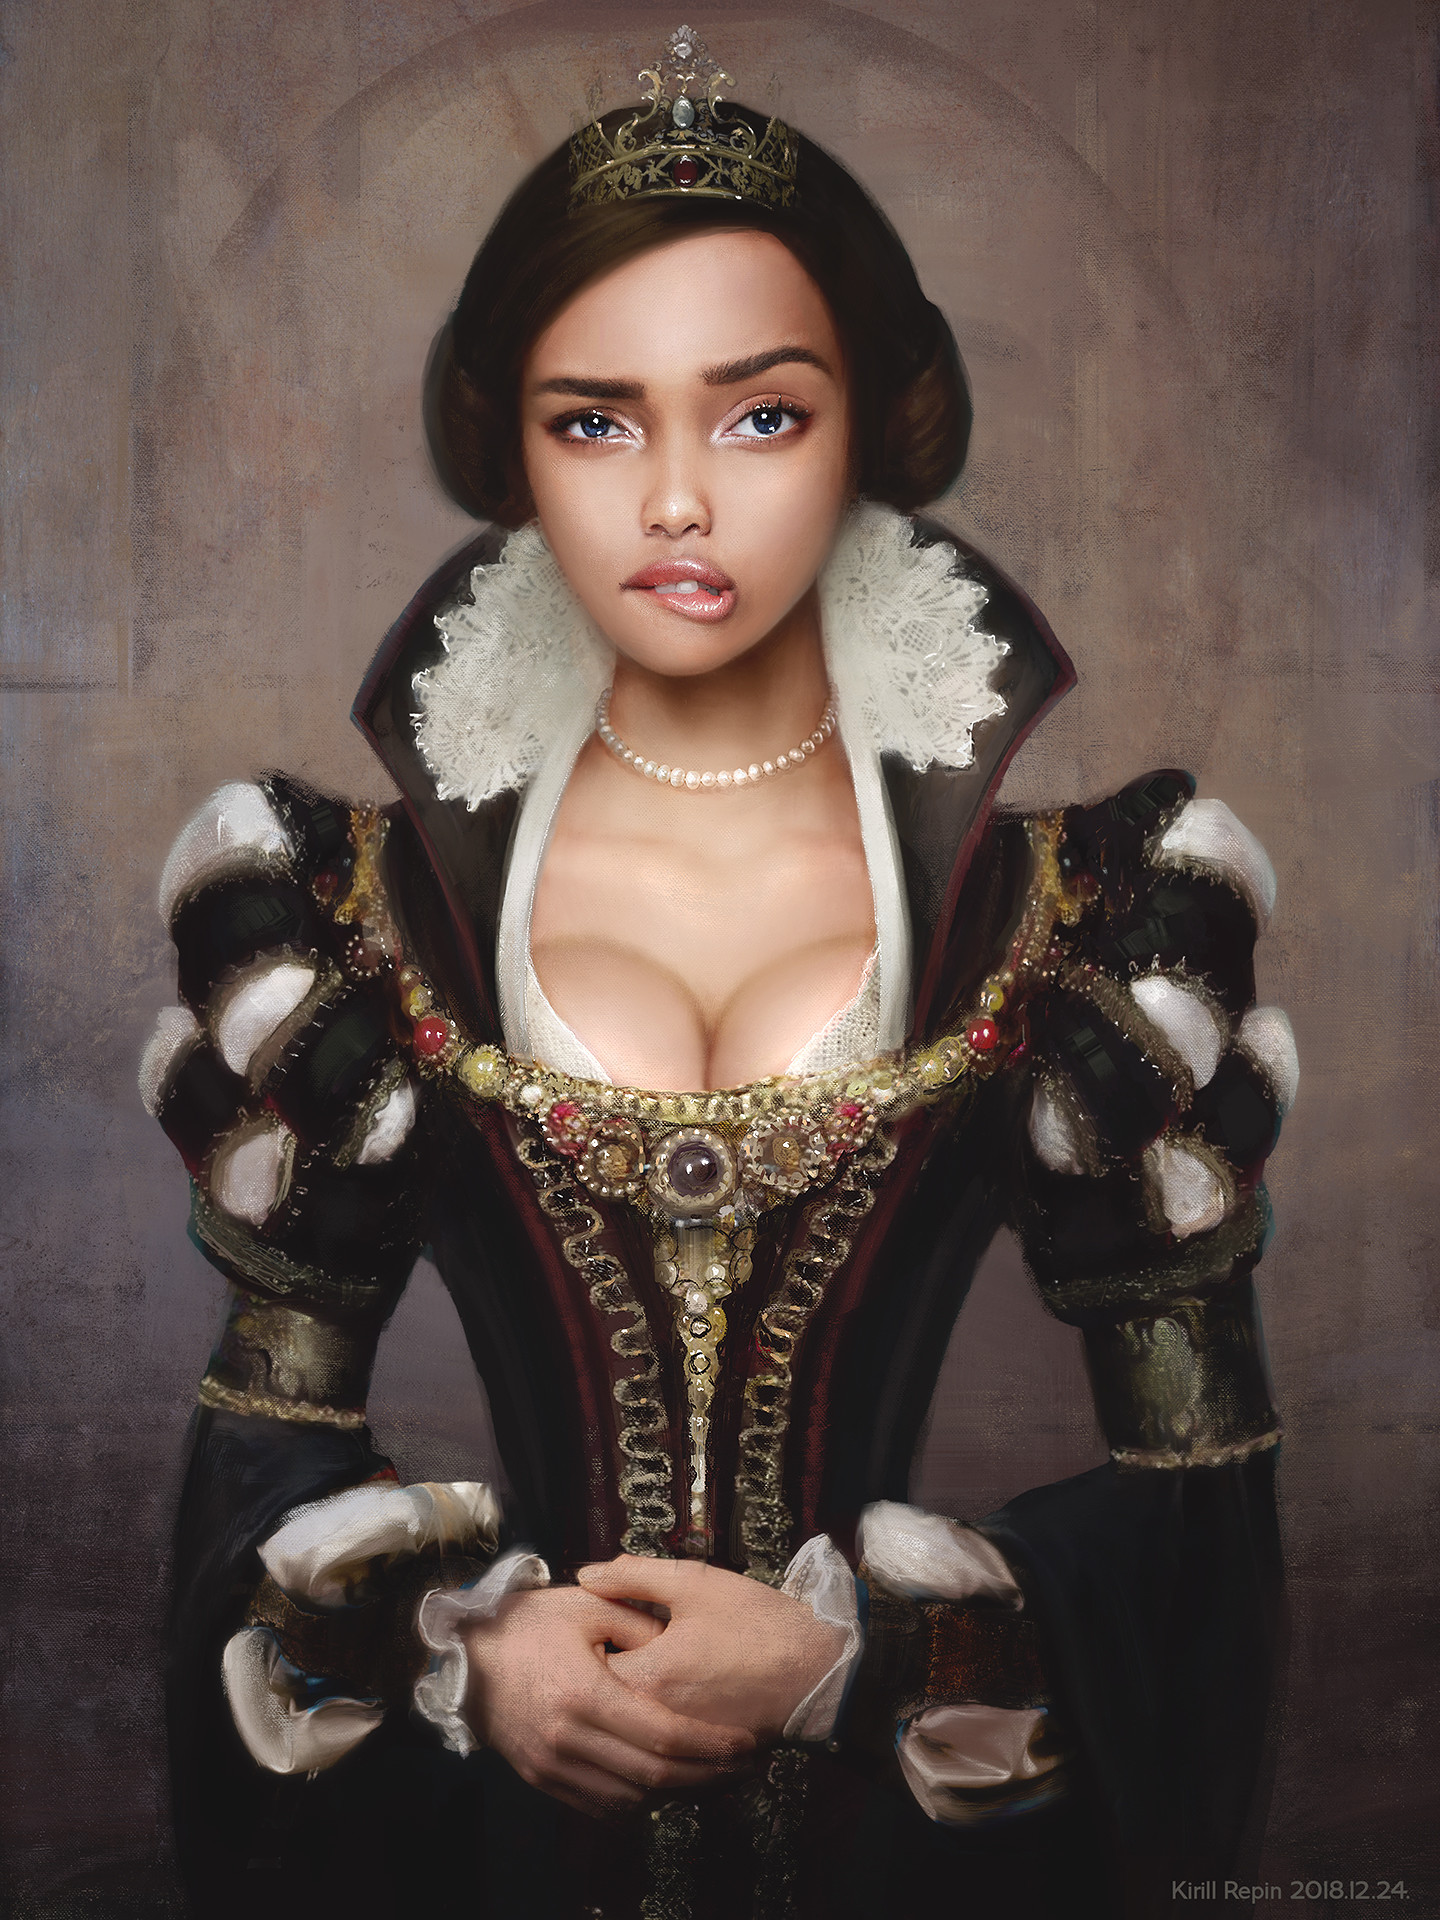 General 1440x1920 fantasy girl fantasy art 2018 (year) cleavage artwork crown pearl necklace biting lips women